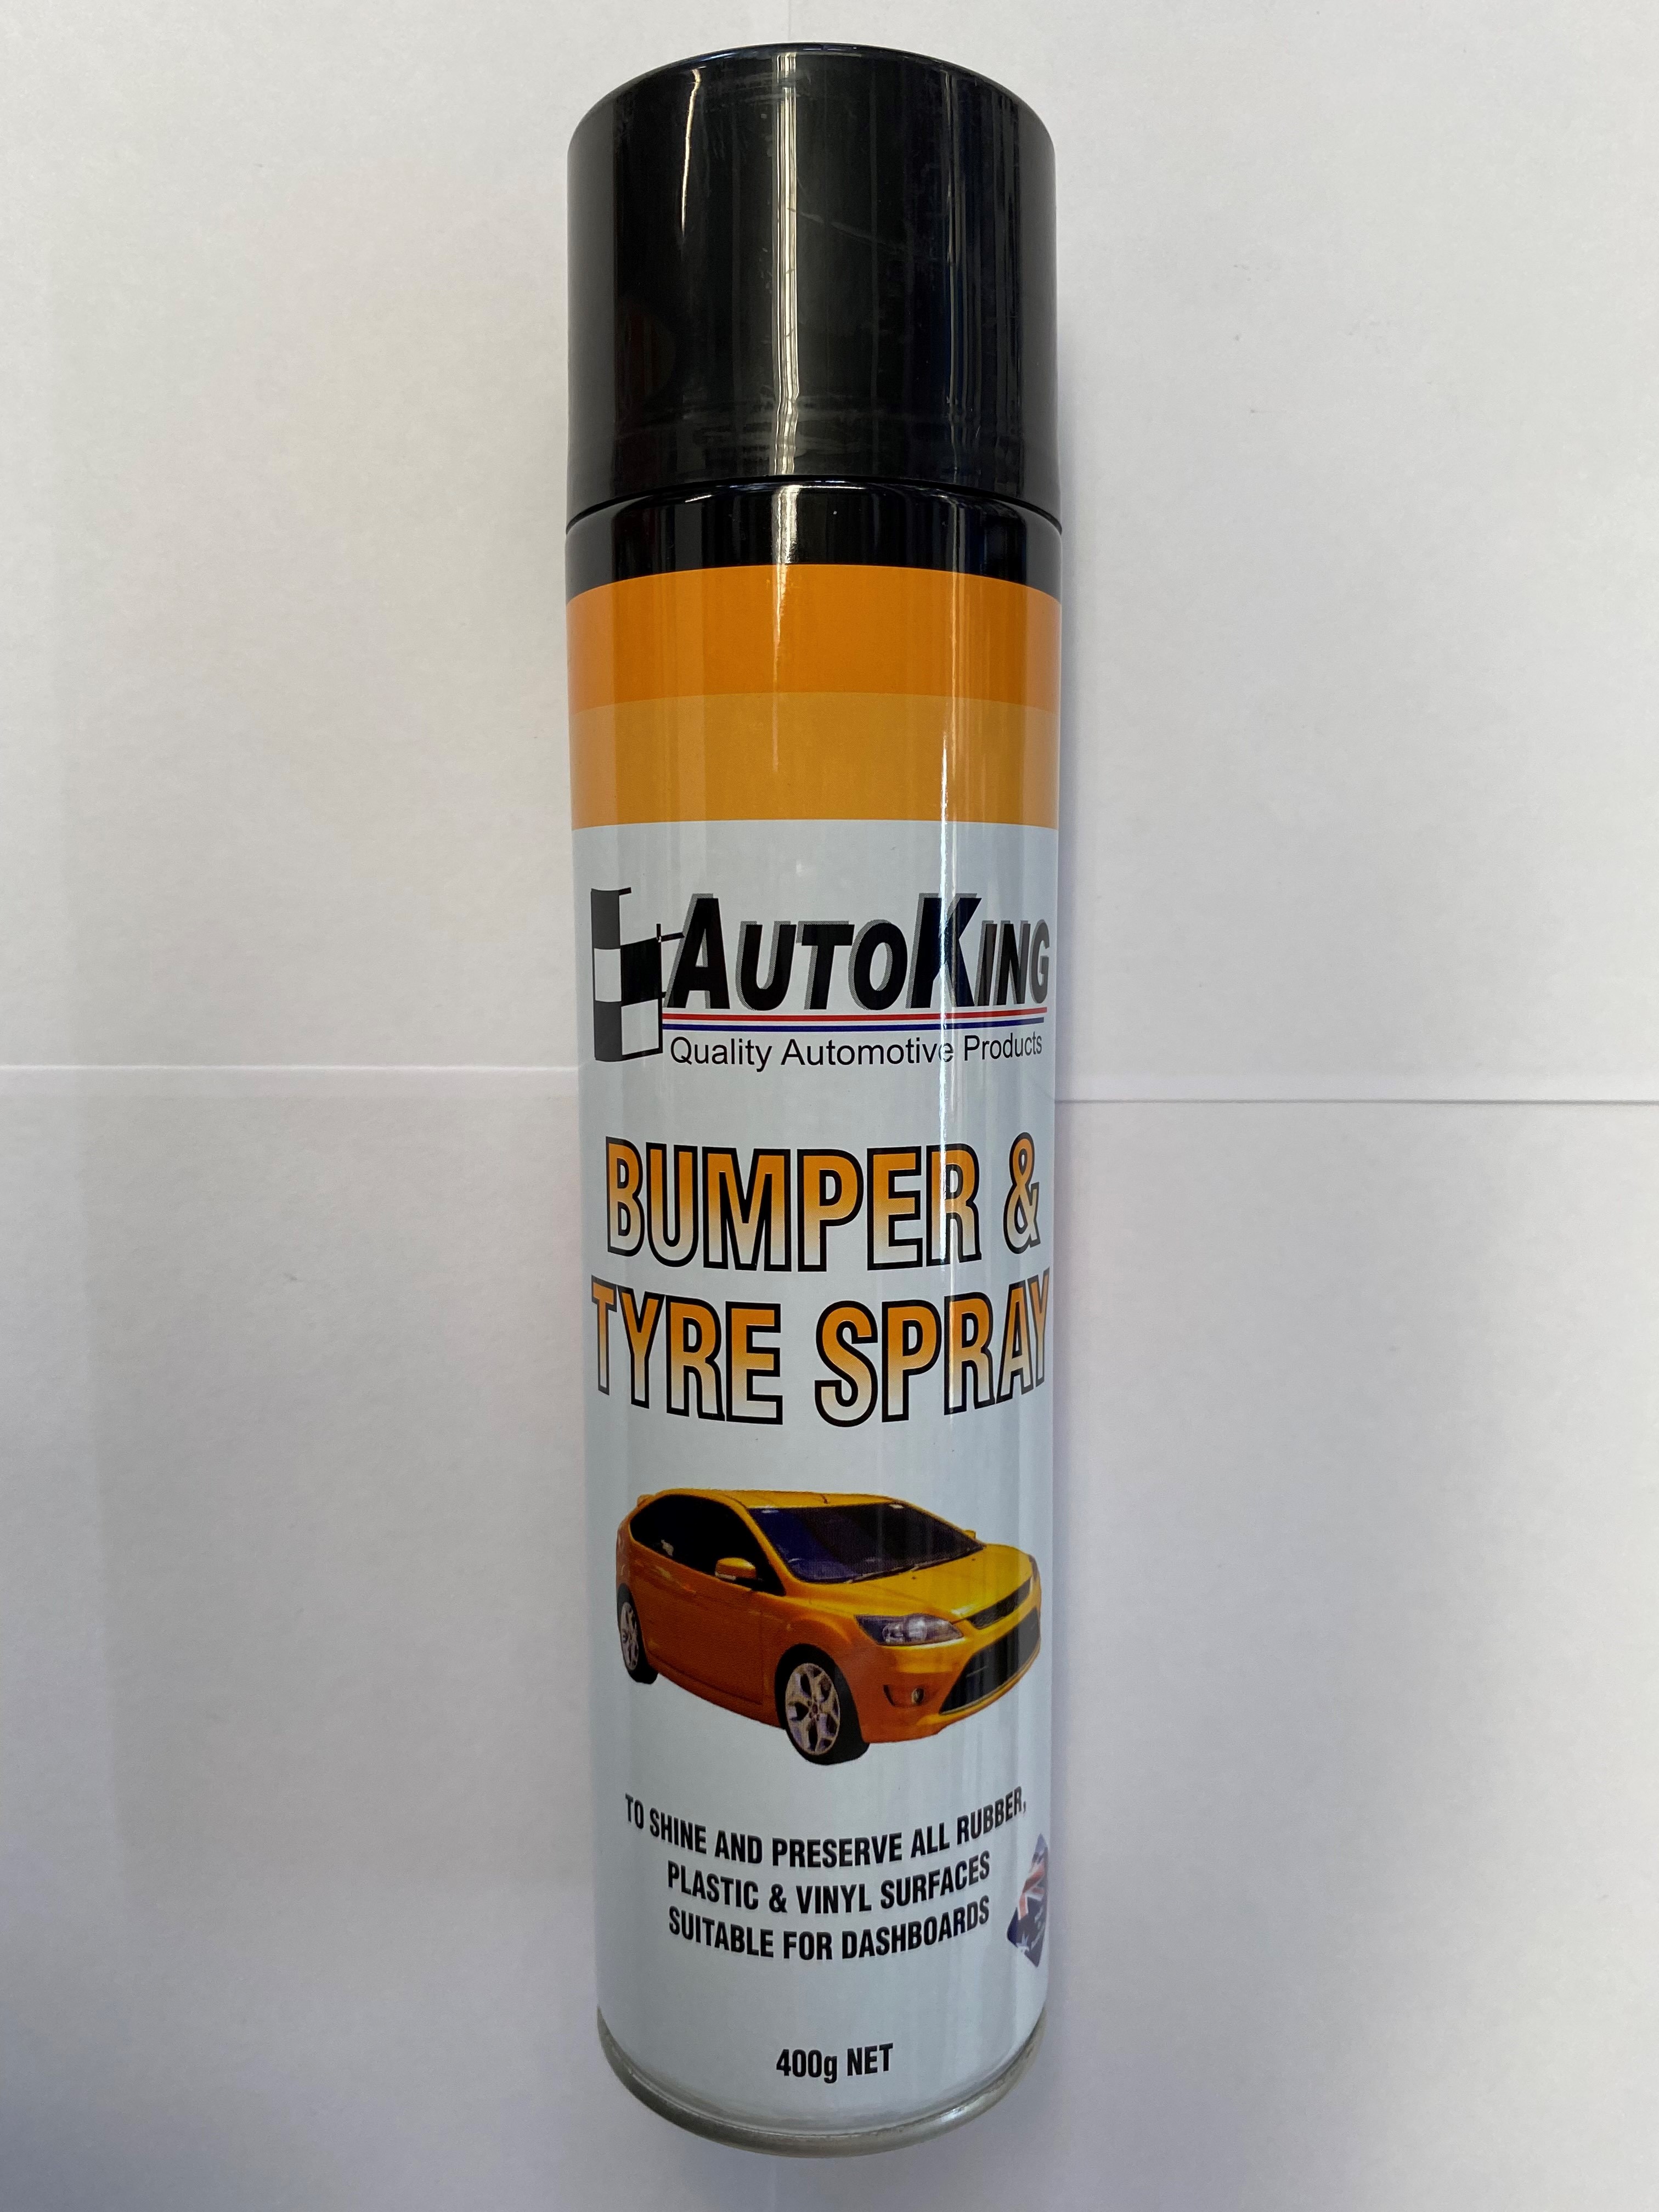 Bumper & Tyre Spray (400g)